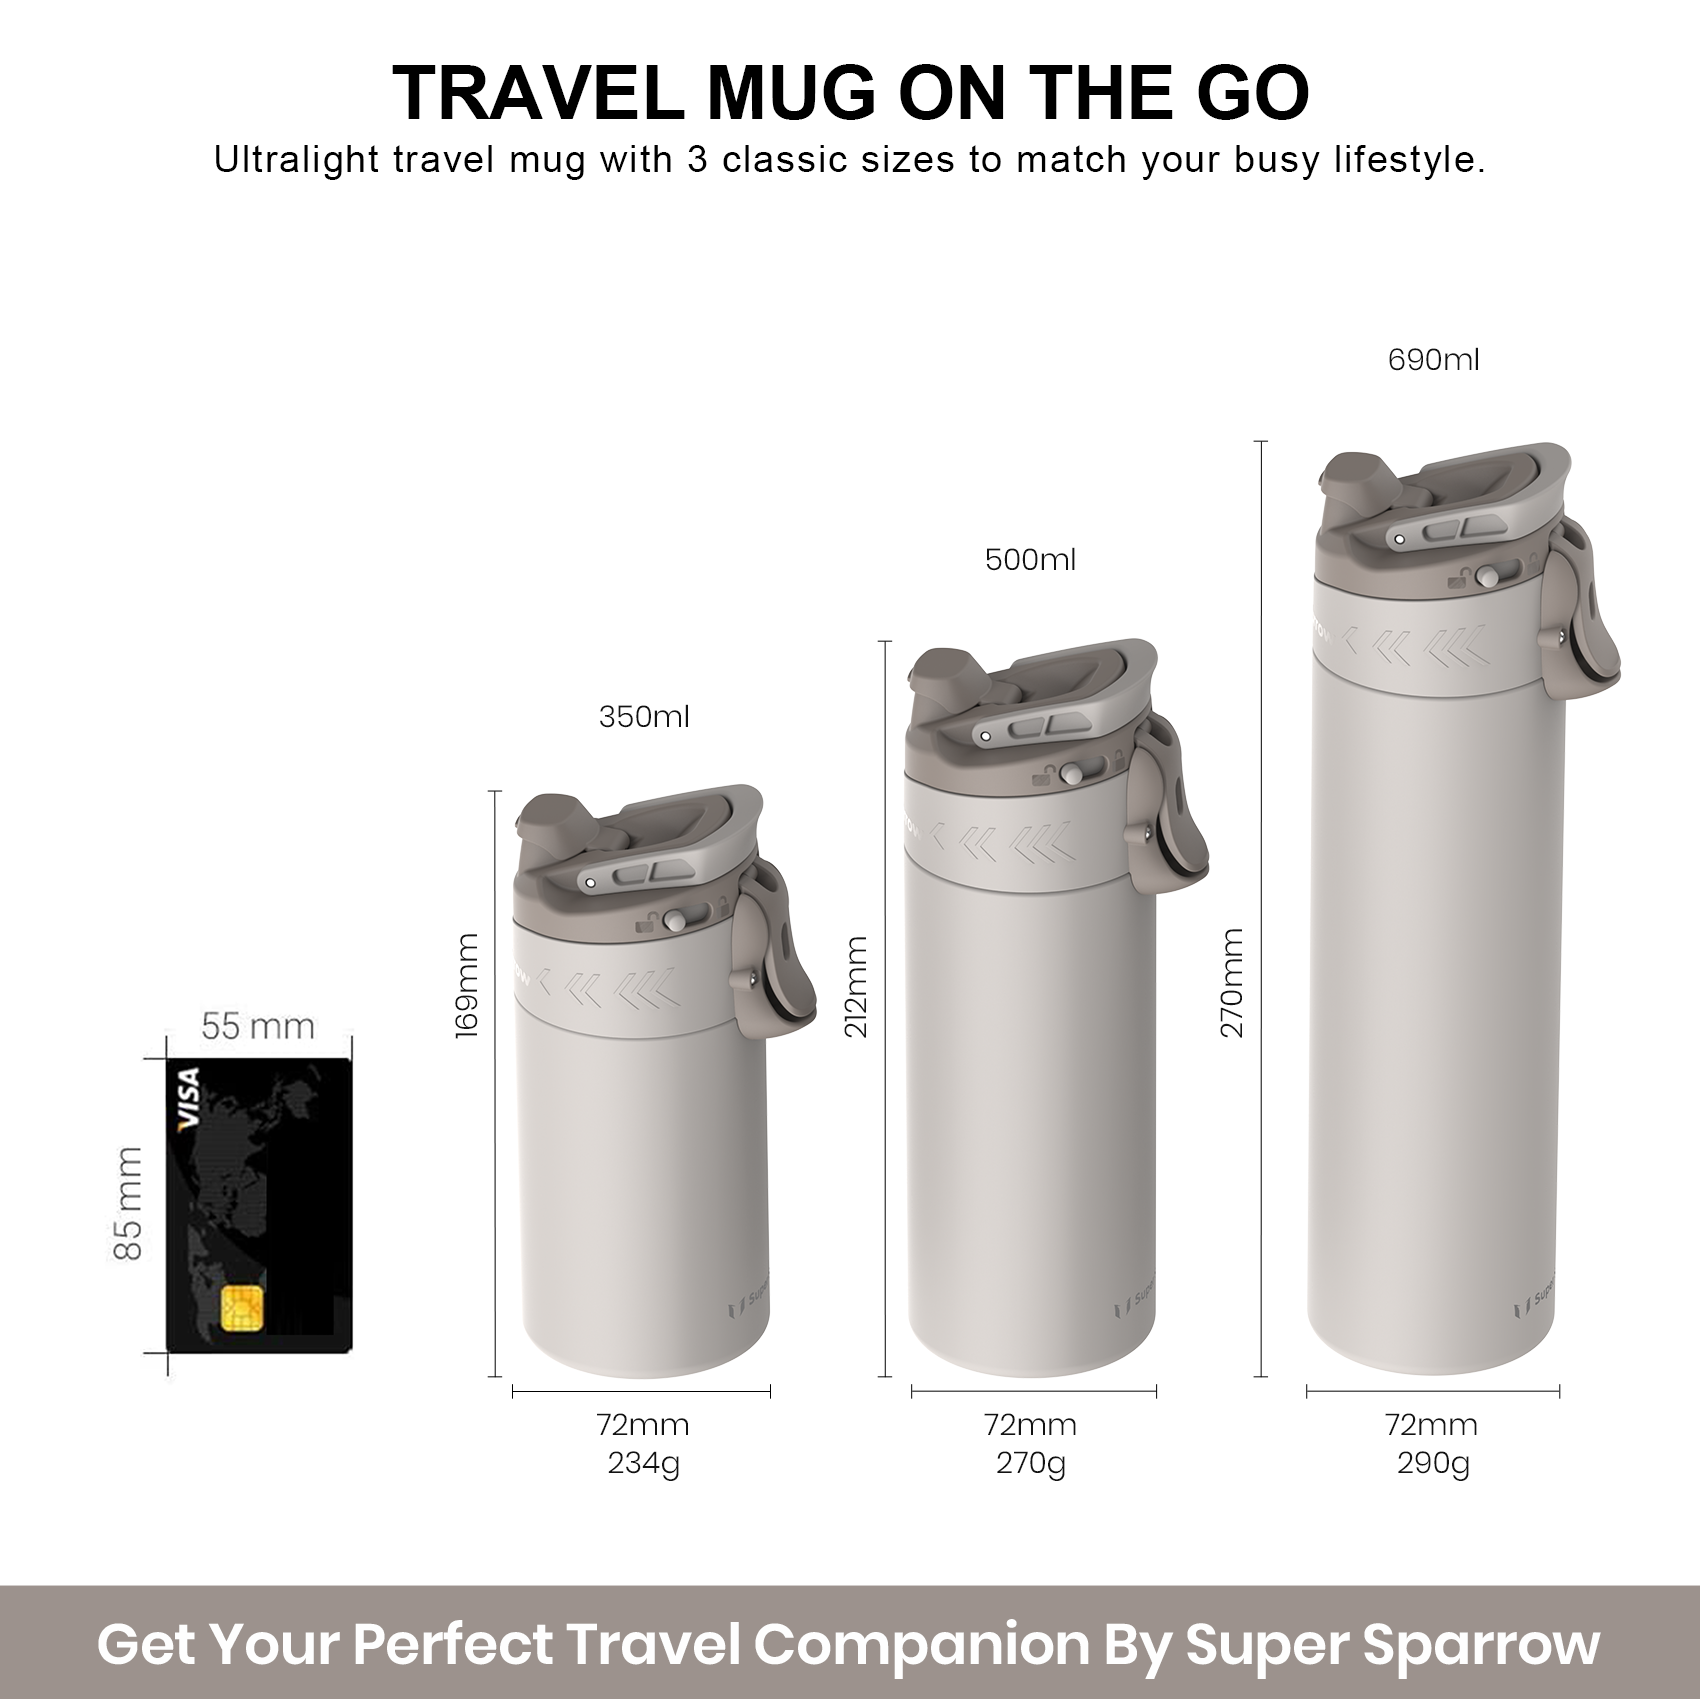 Super Sparrow K500 and K350 Ultralite Travel Mugs